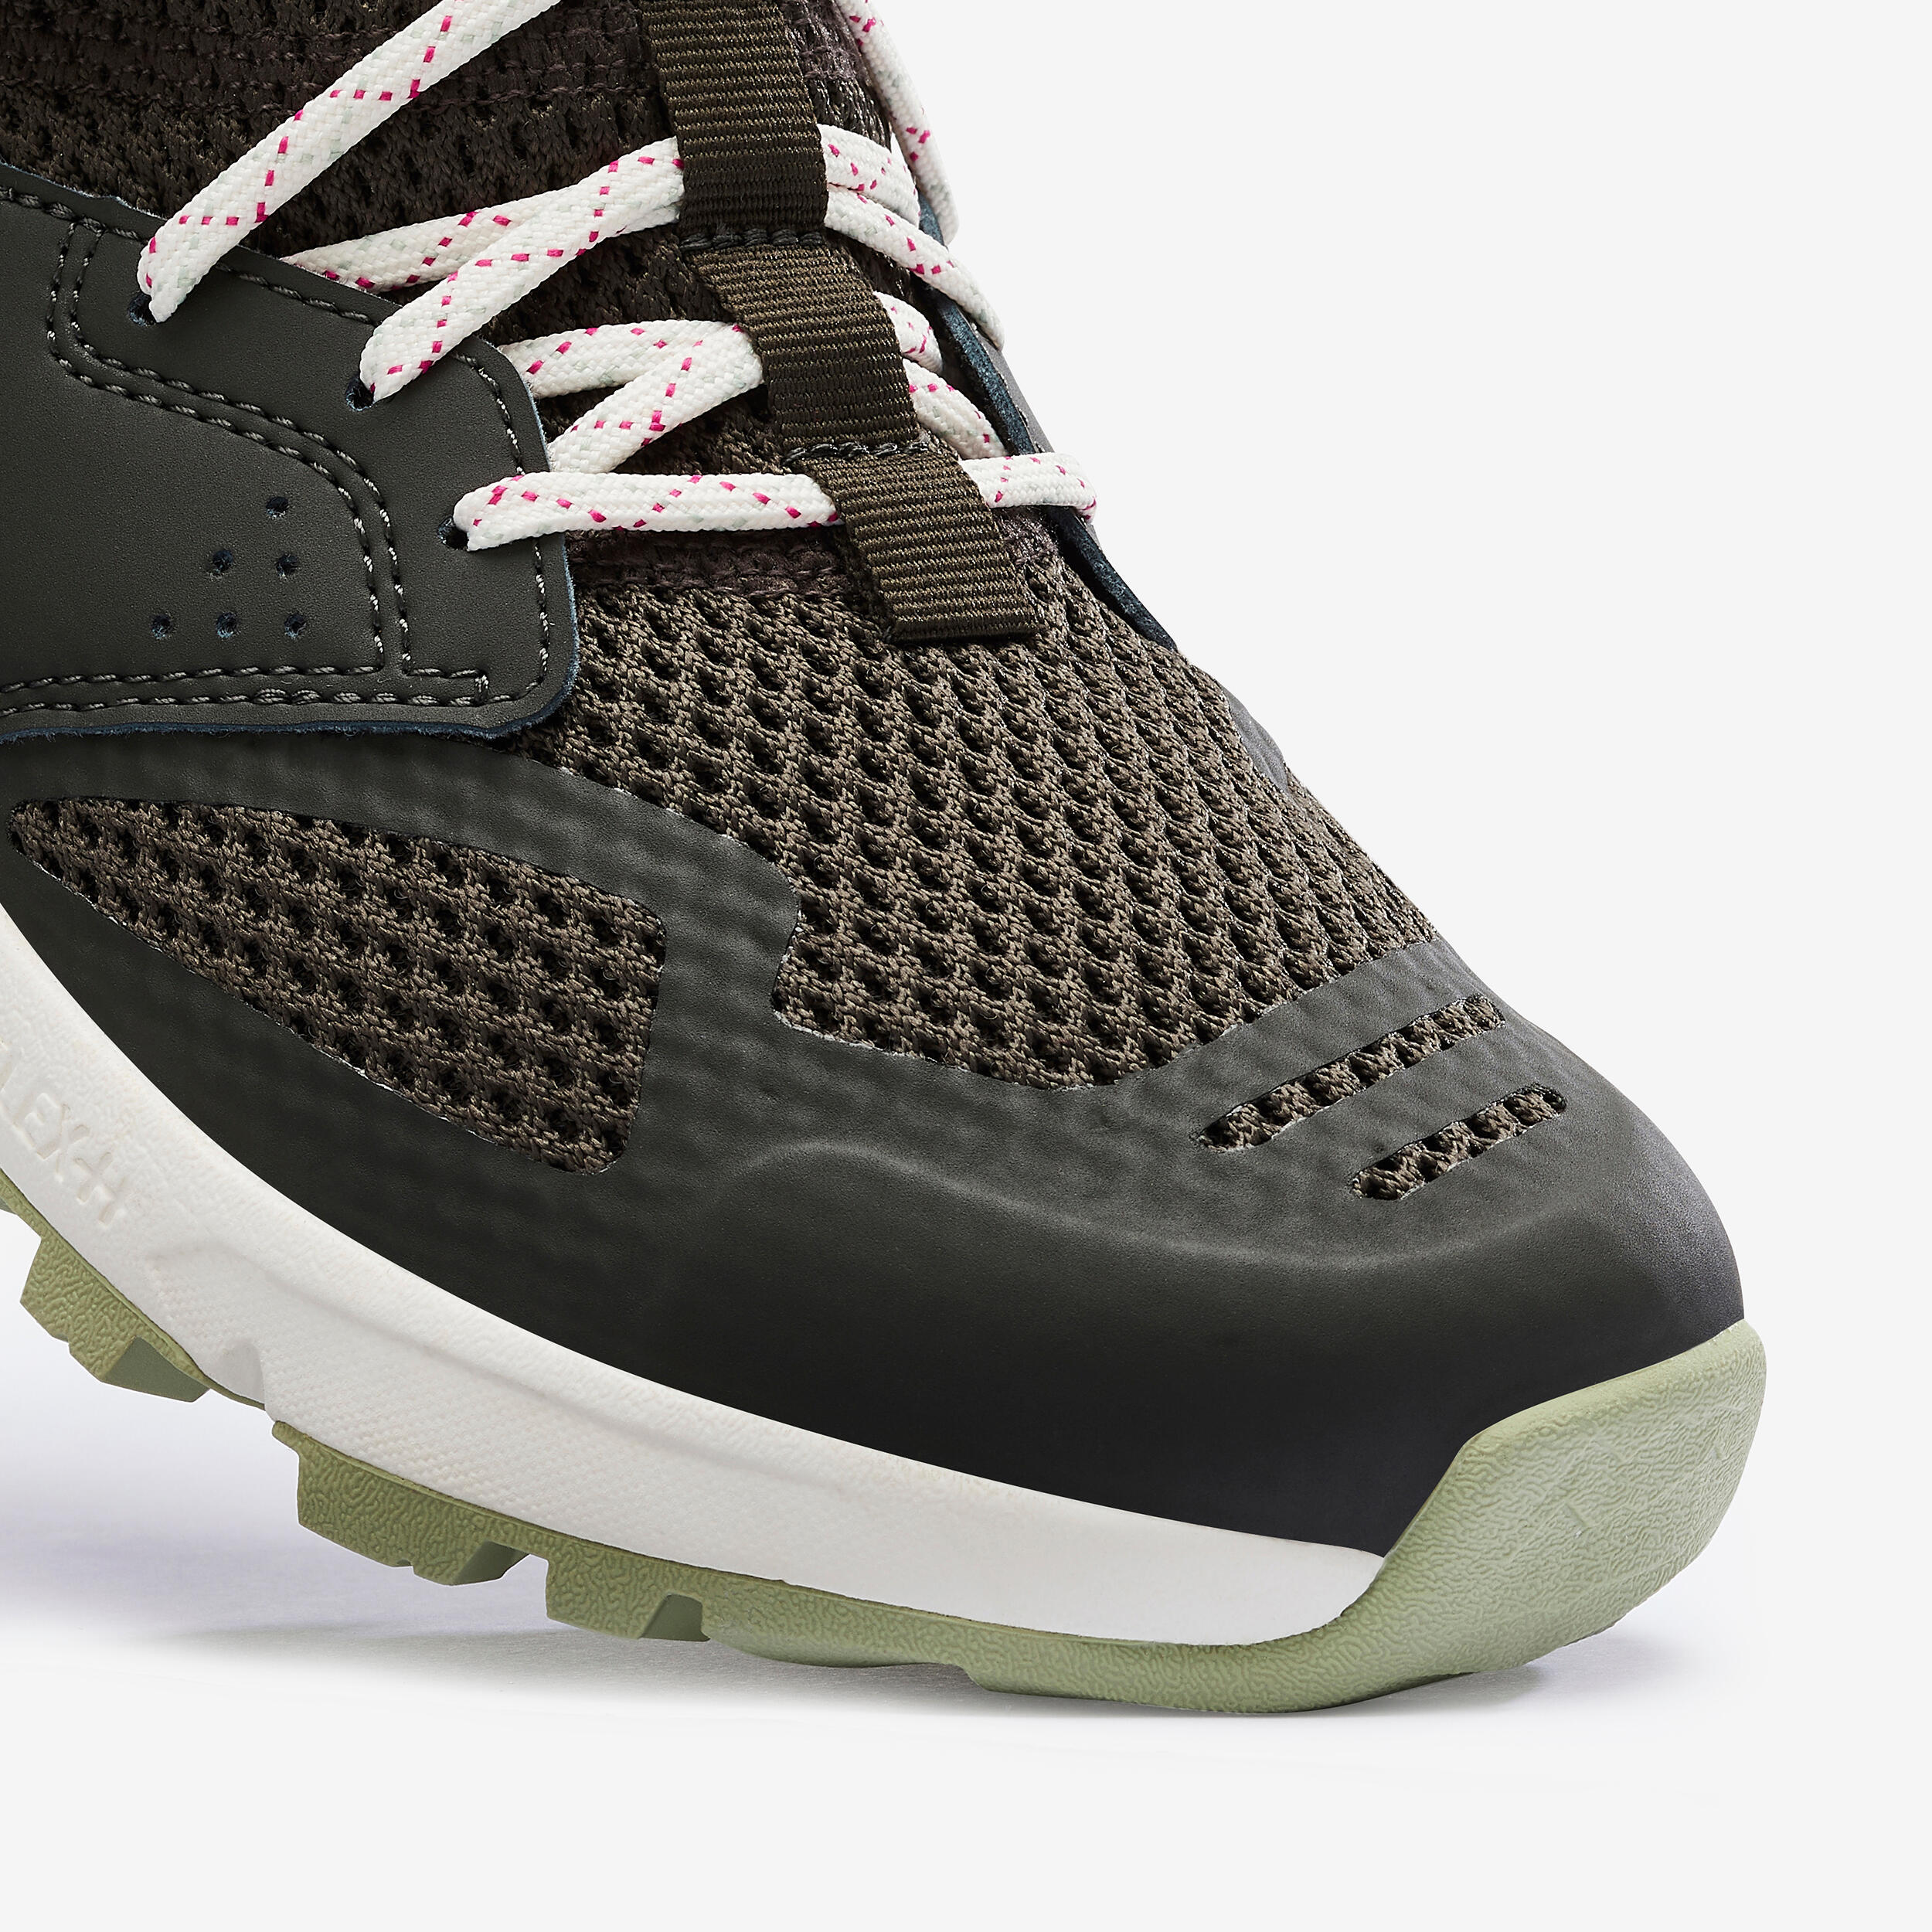 NW 500 breathable Nordic walking shoes - khaki 4/8